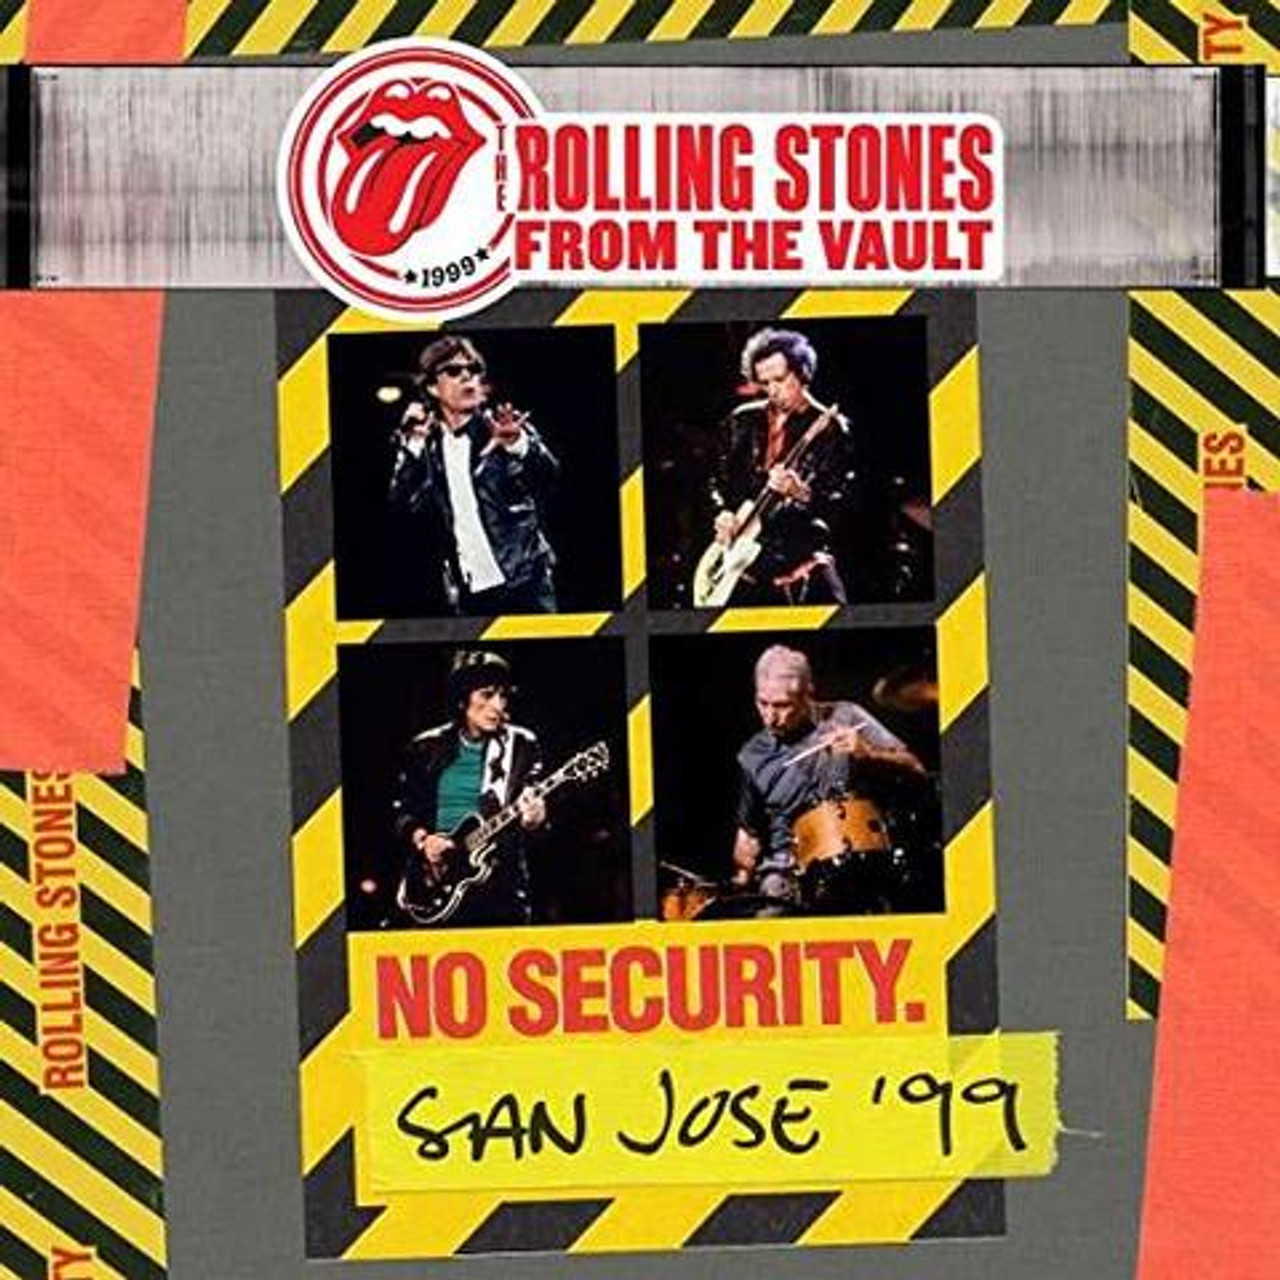 The Rolling Stones, No Security. San Jose '99 album cover